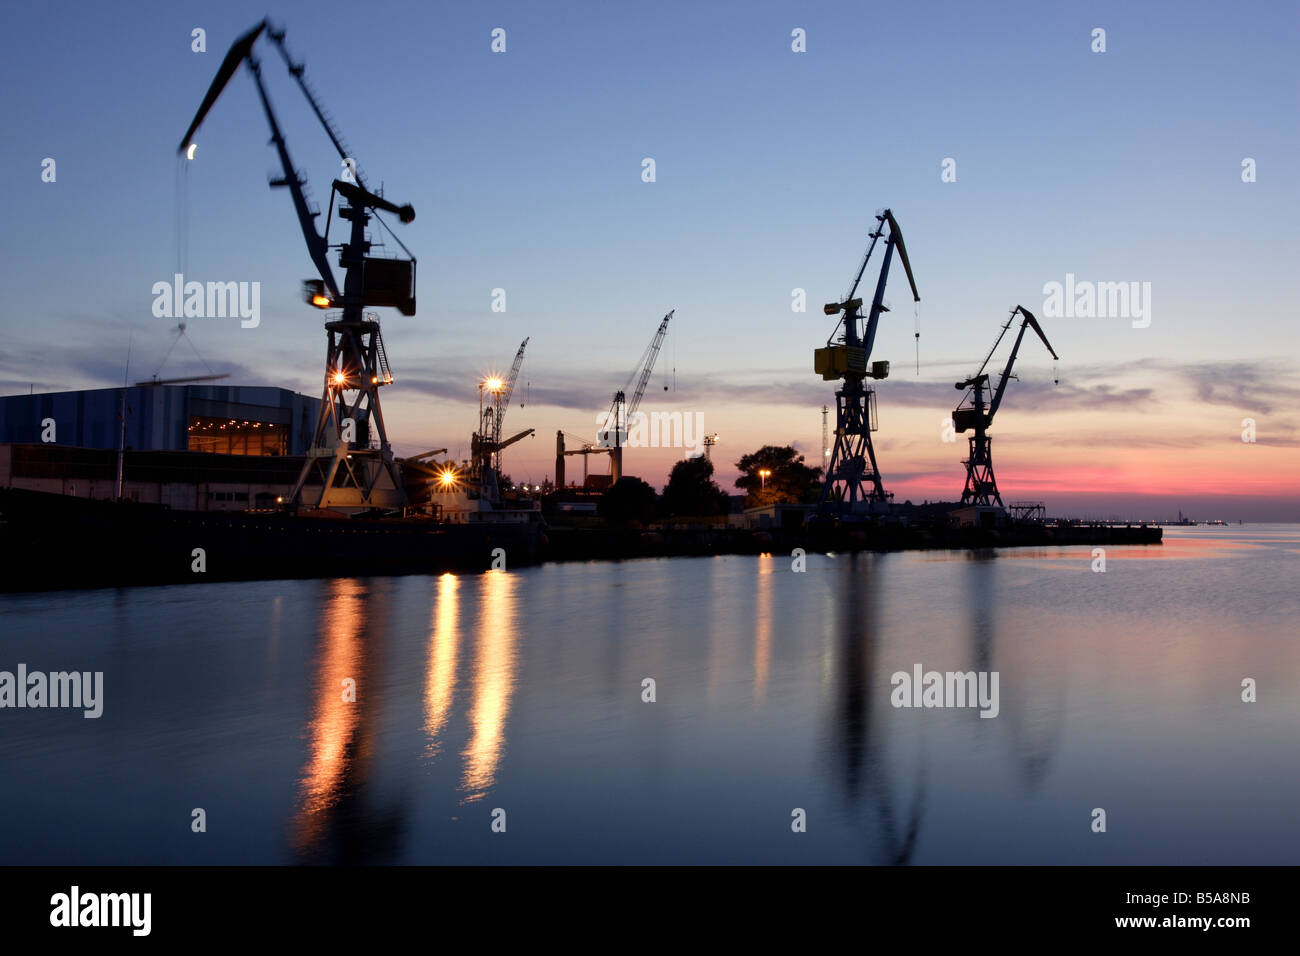 The Aker MTW dockyard in the evening, Wismar, Germany Stock Photo